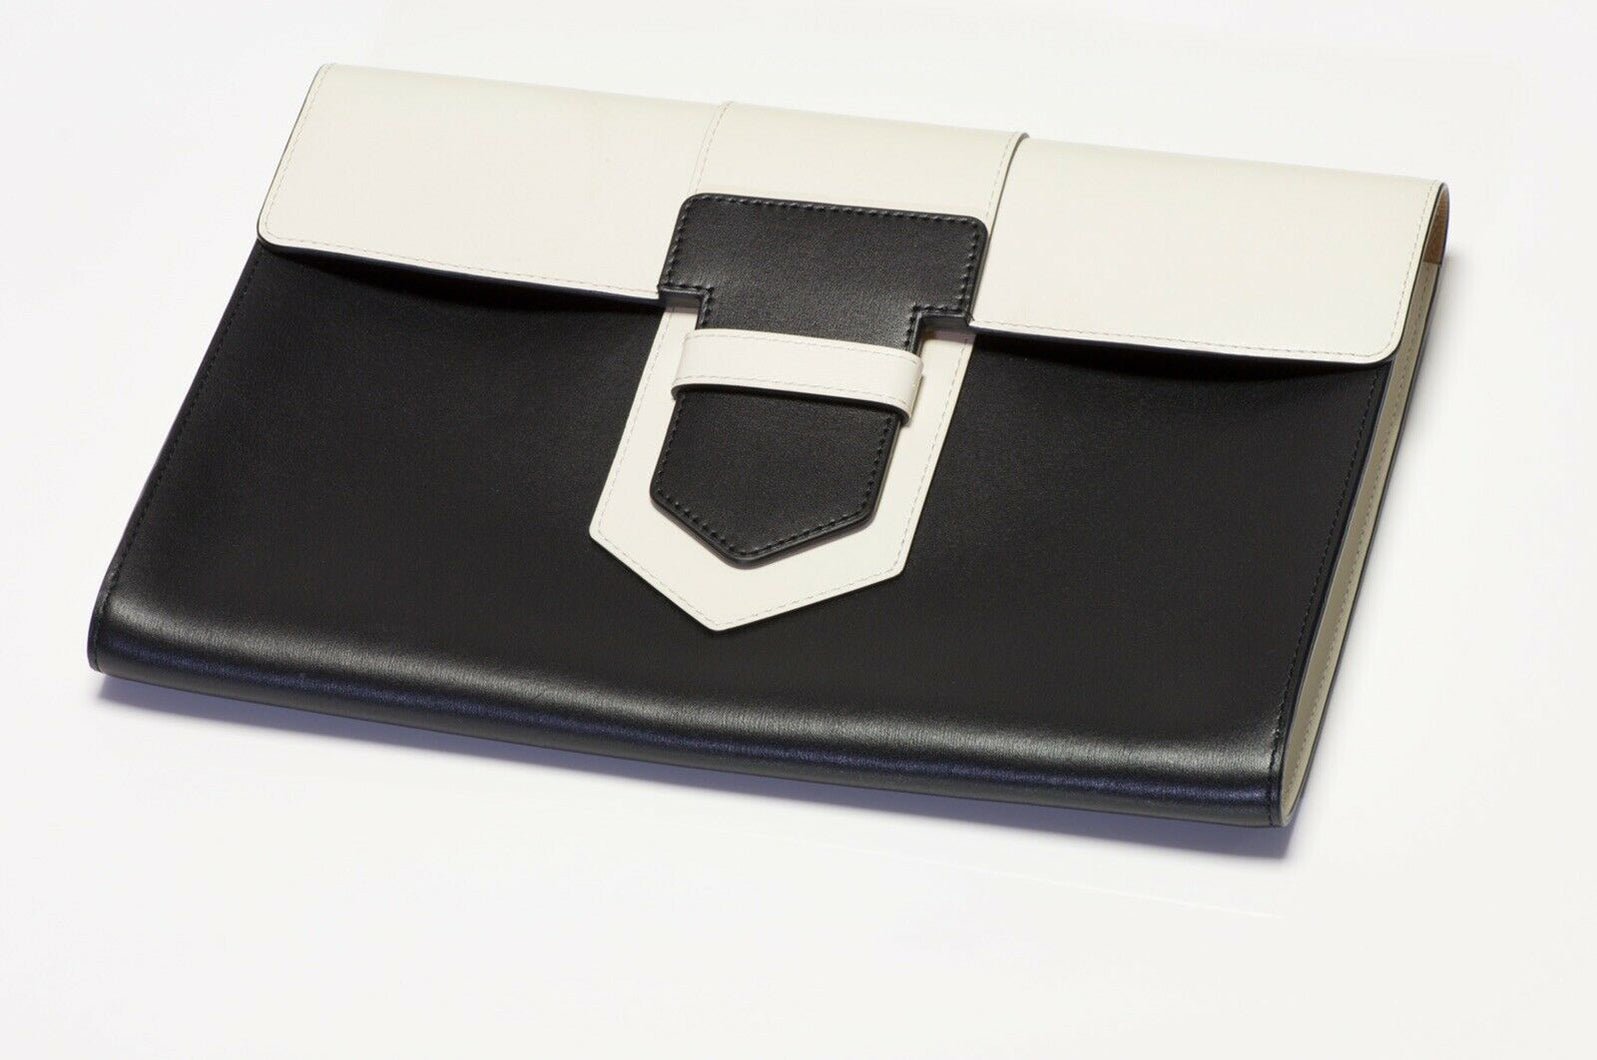 Delvaux Black White Leather Envelope Clutch Bag